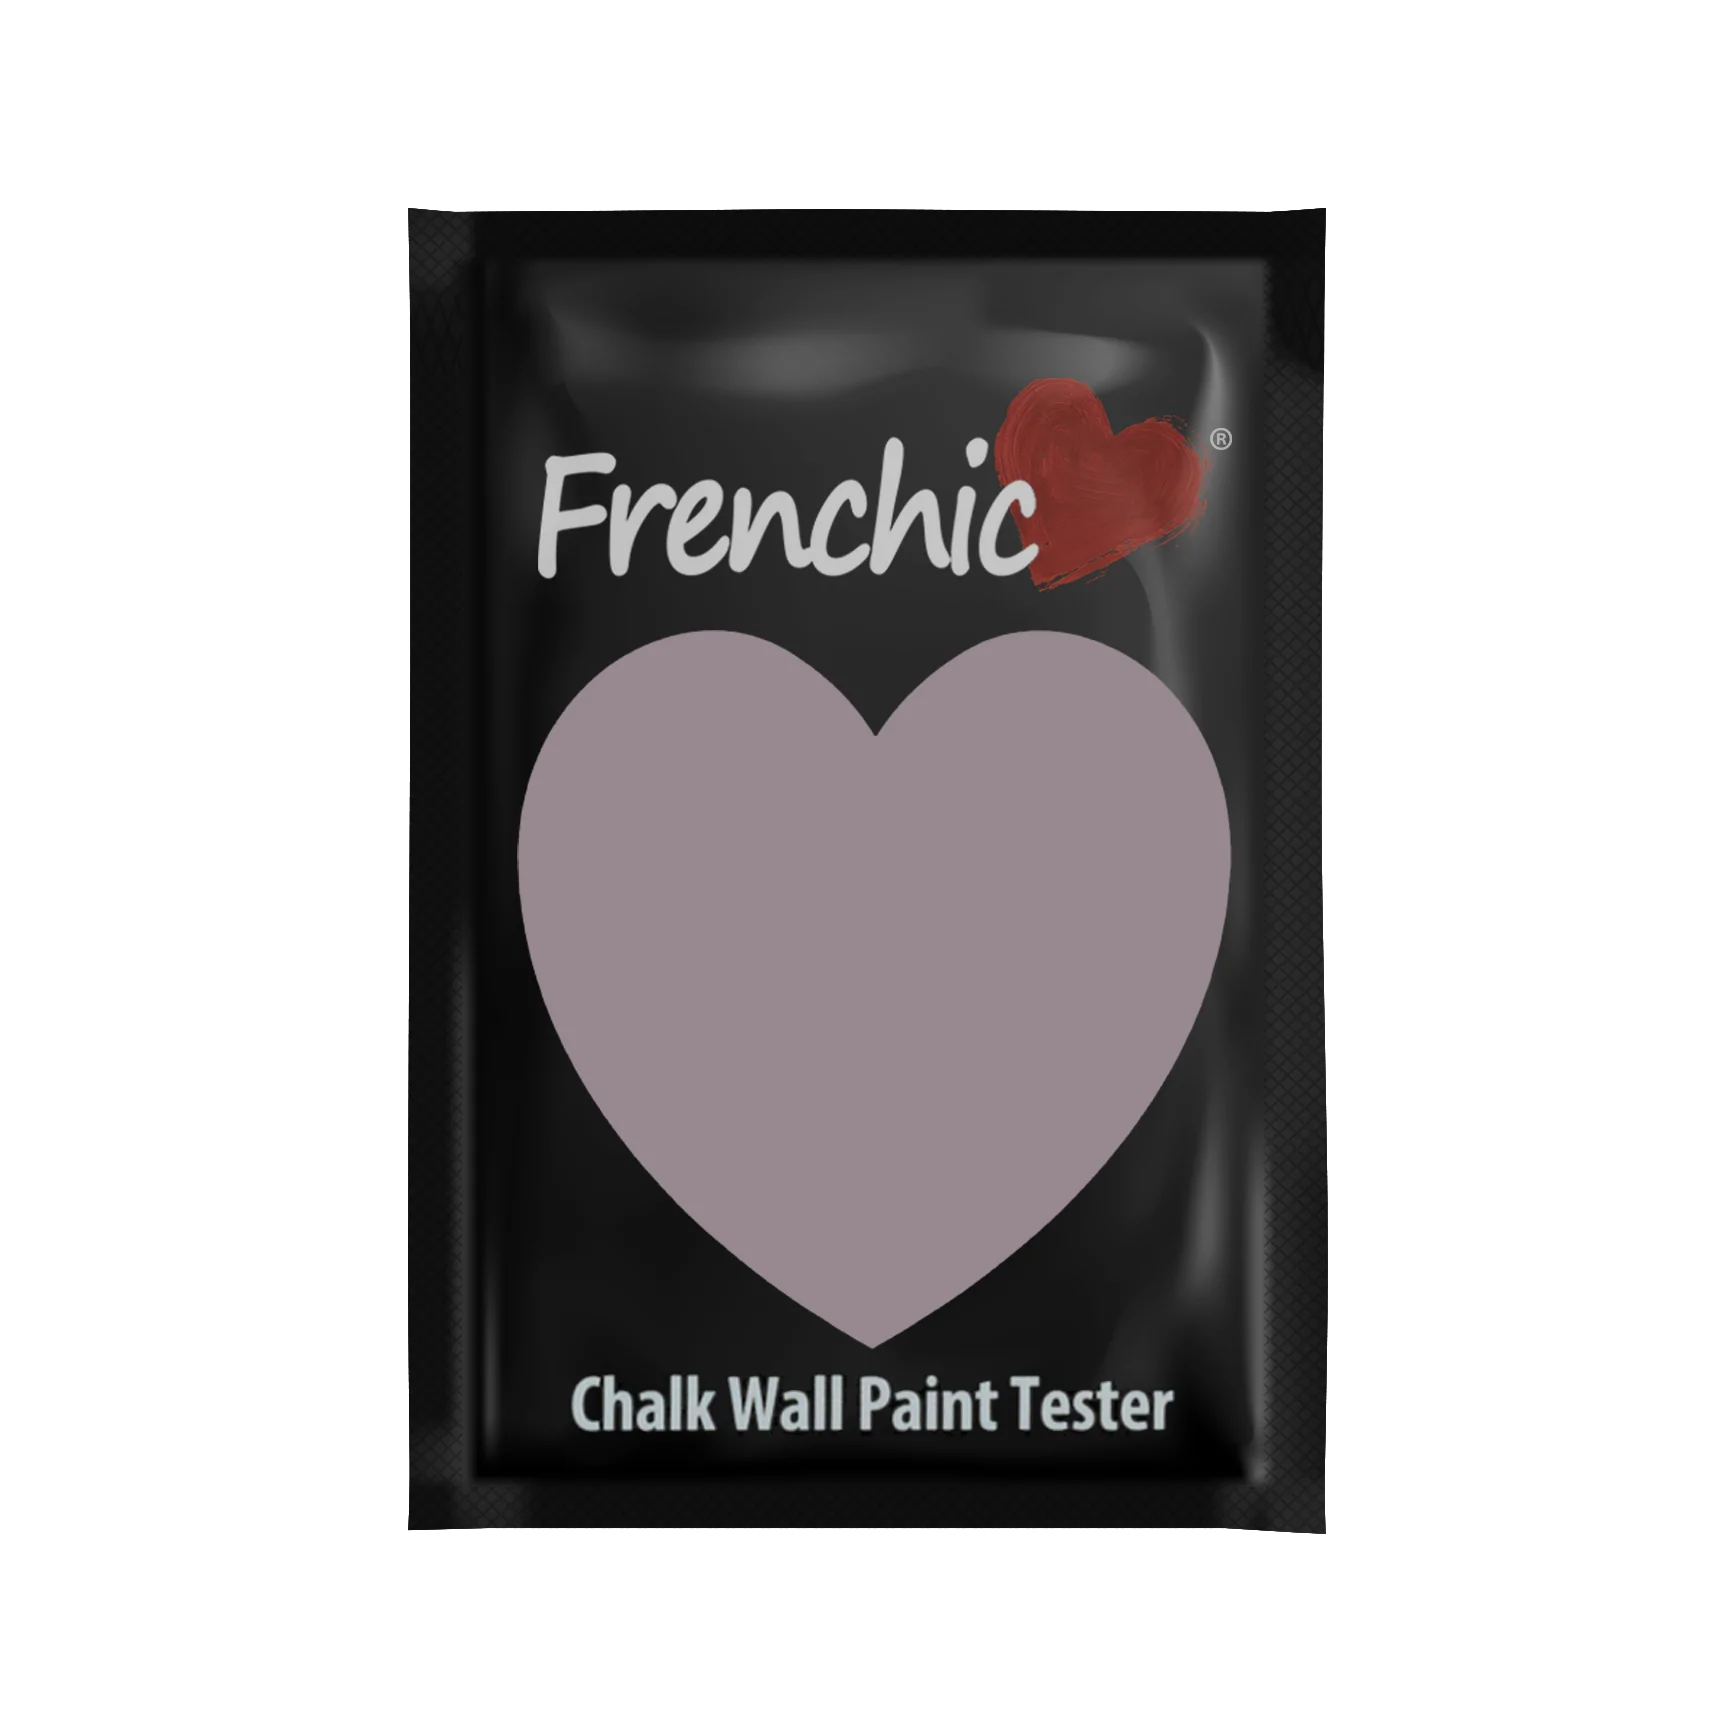 Frenchic Paint | Velvet Crush Paint Sample by Weirs of Baggot St